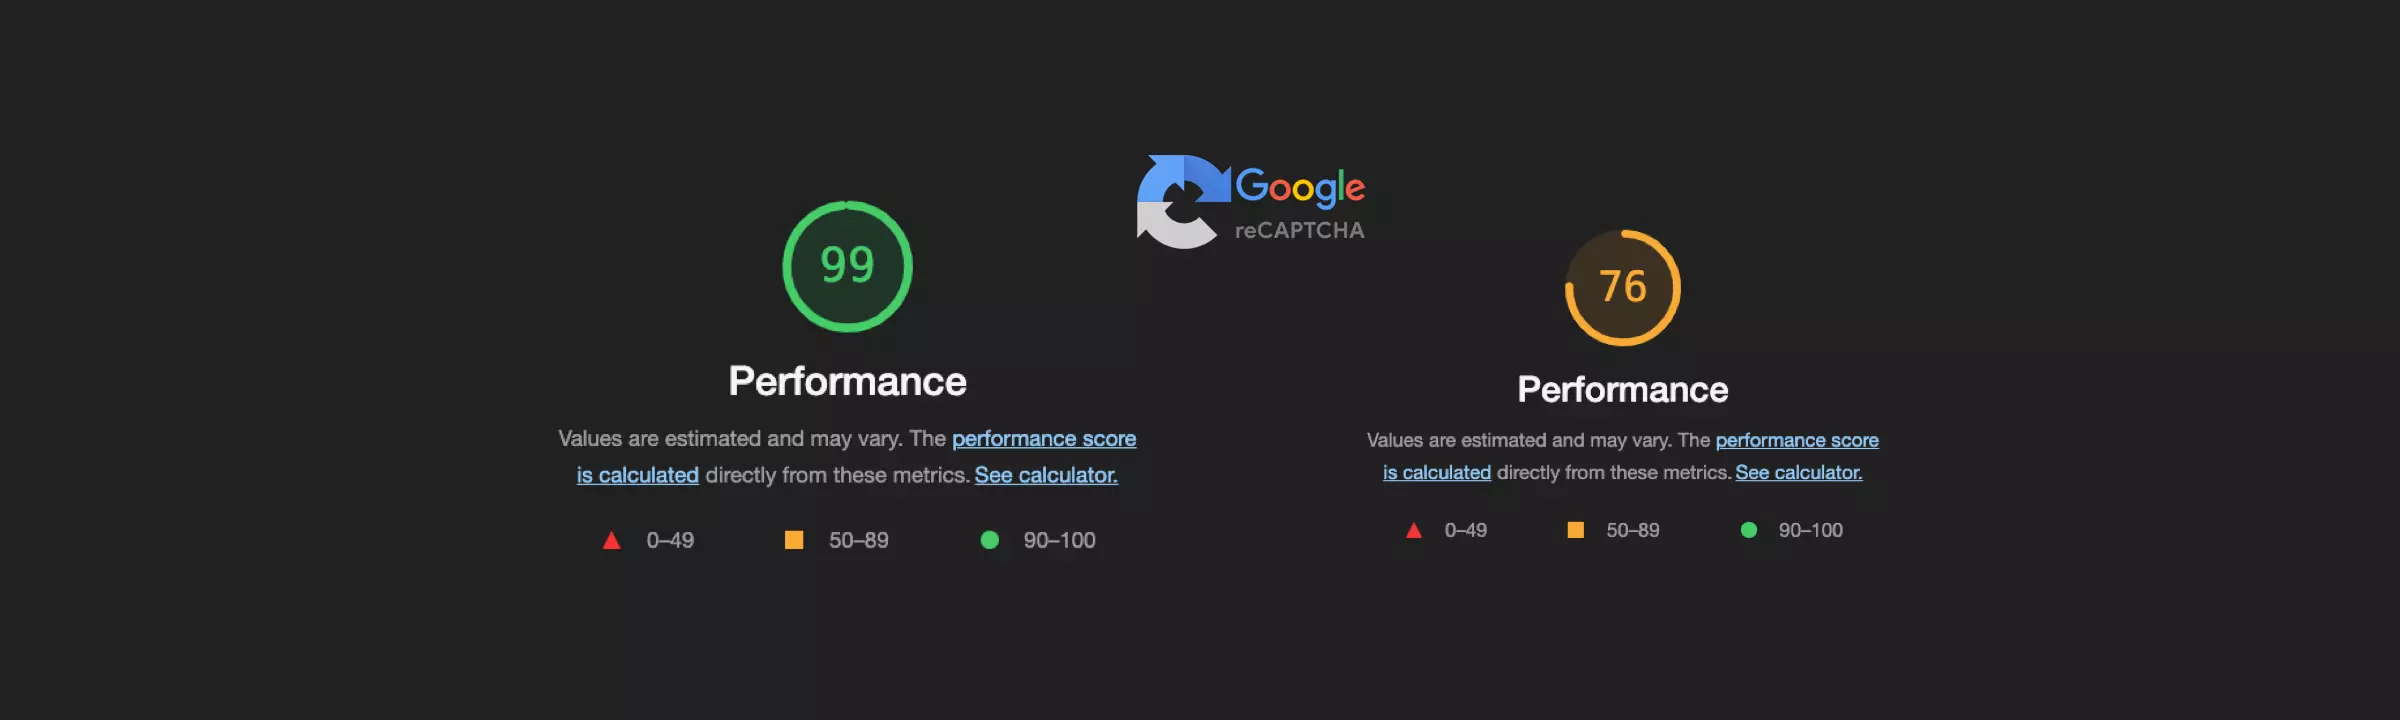 Lighthouse reCaptcha performance results